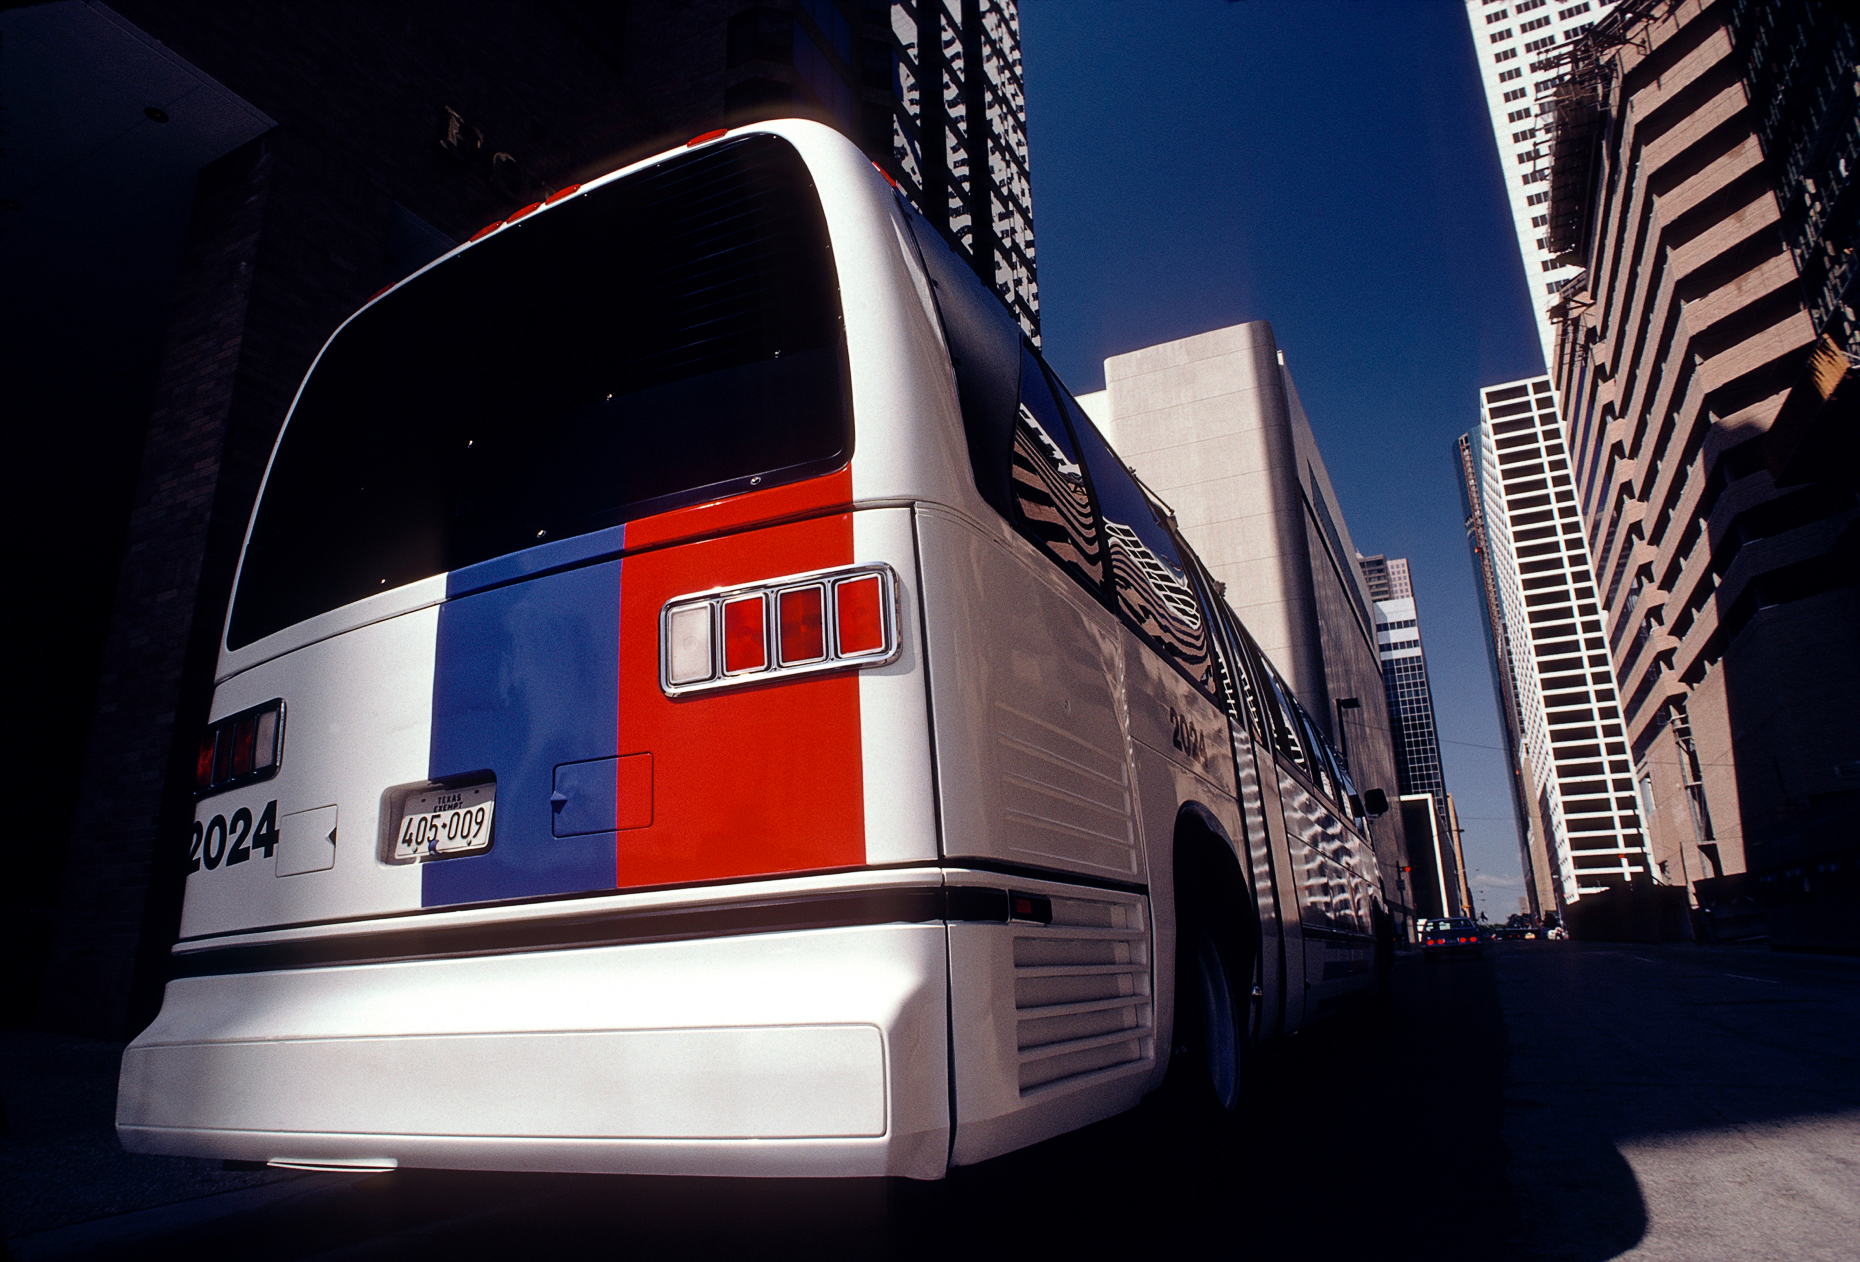 Rear view of a colorful red white & blue bus, Metropolitan Trans